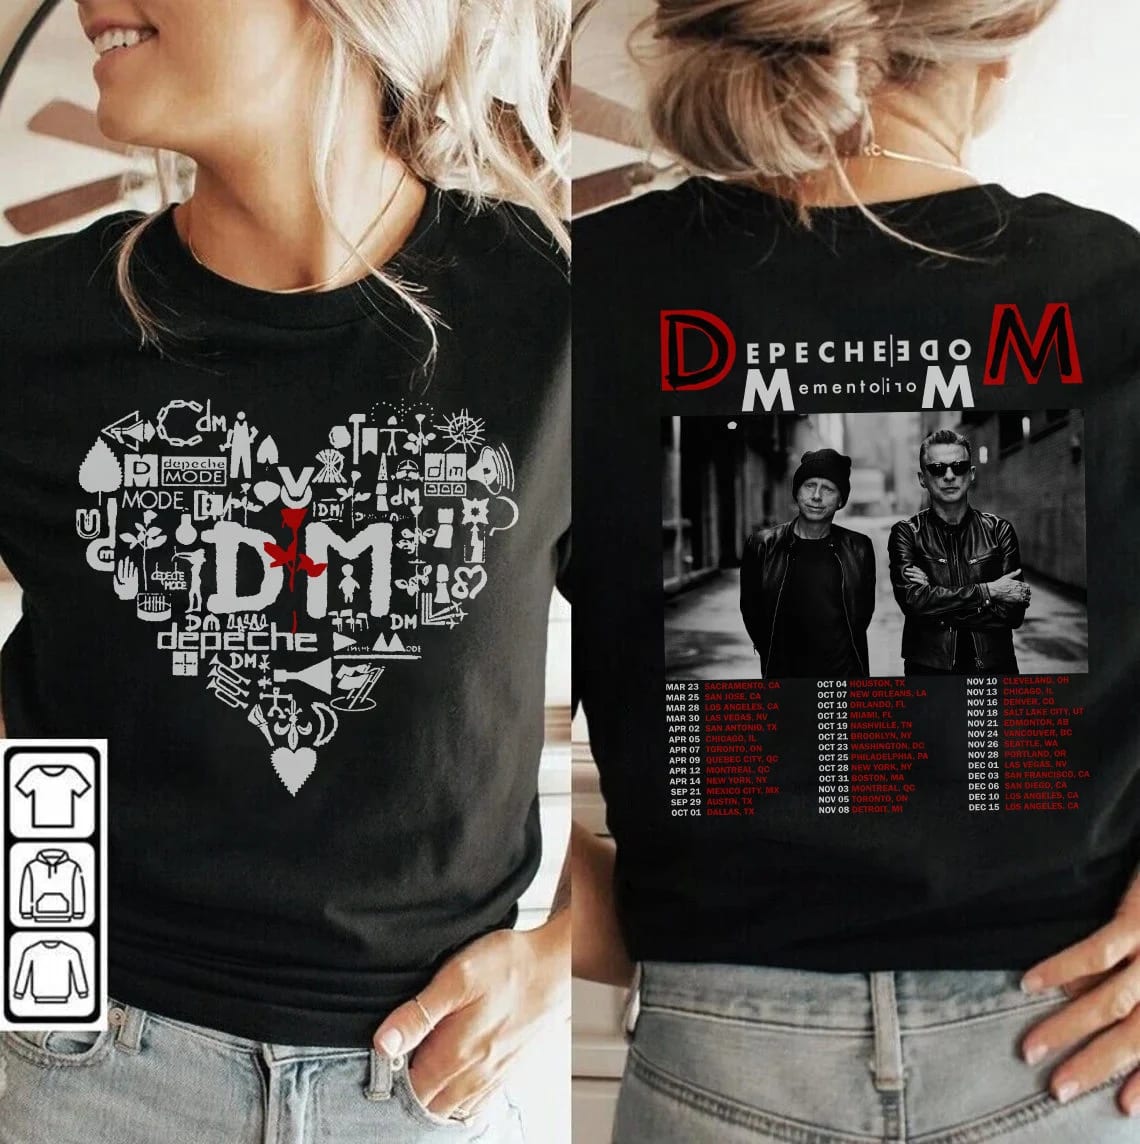 Depeche Mode Memento Mori World Tour 2023 T Shirt Hddq5w.jpg